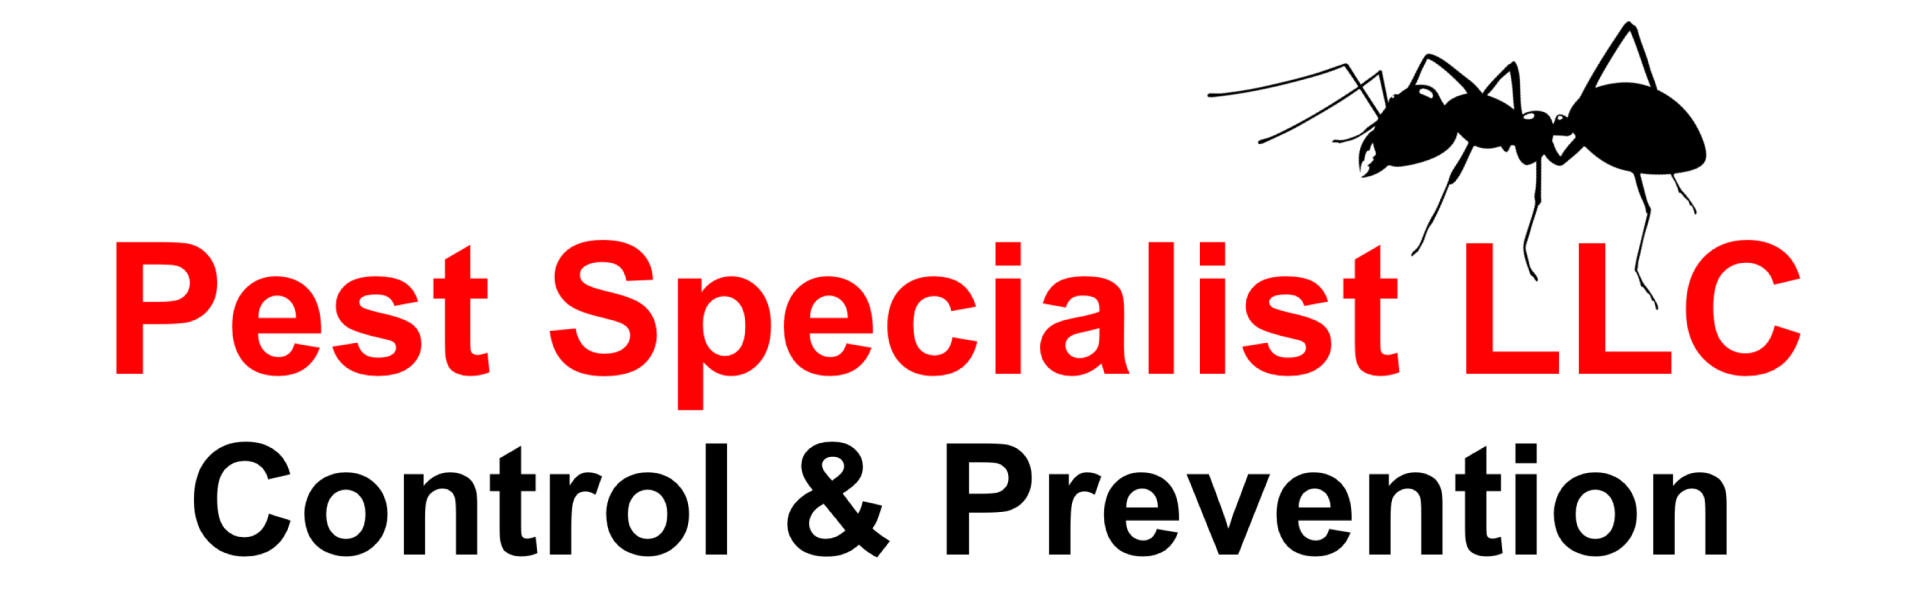 Pest Specialist LLC Logo Tablet